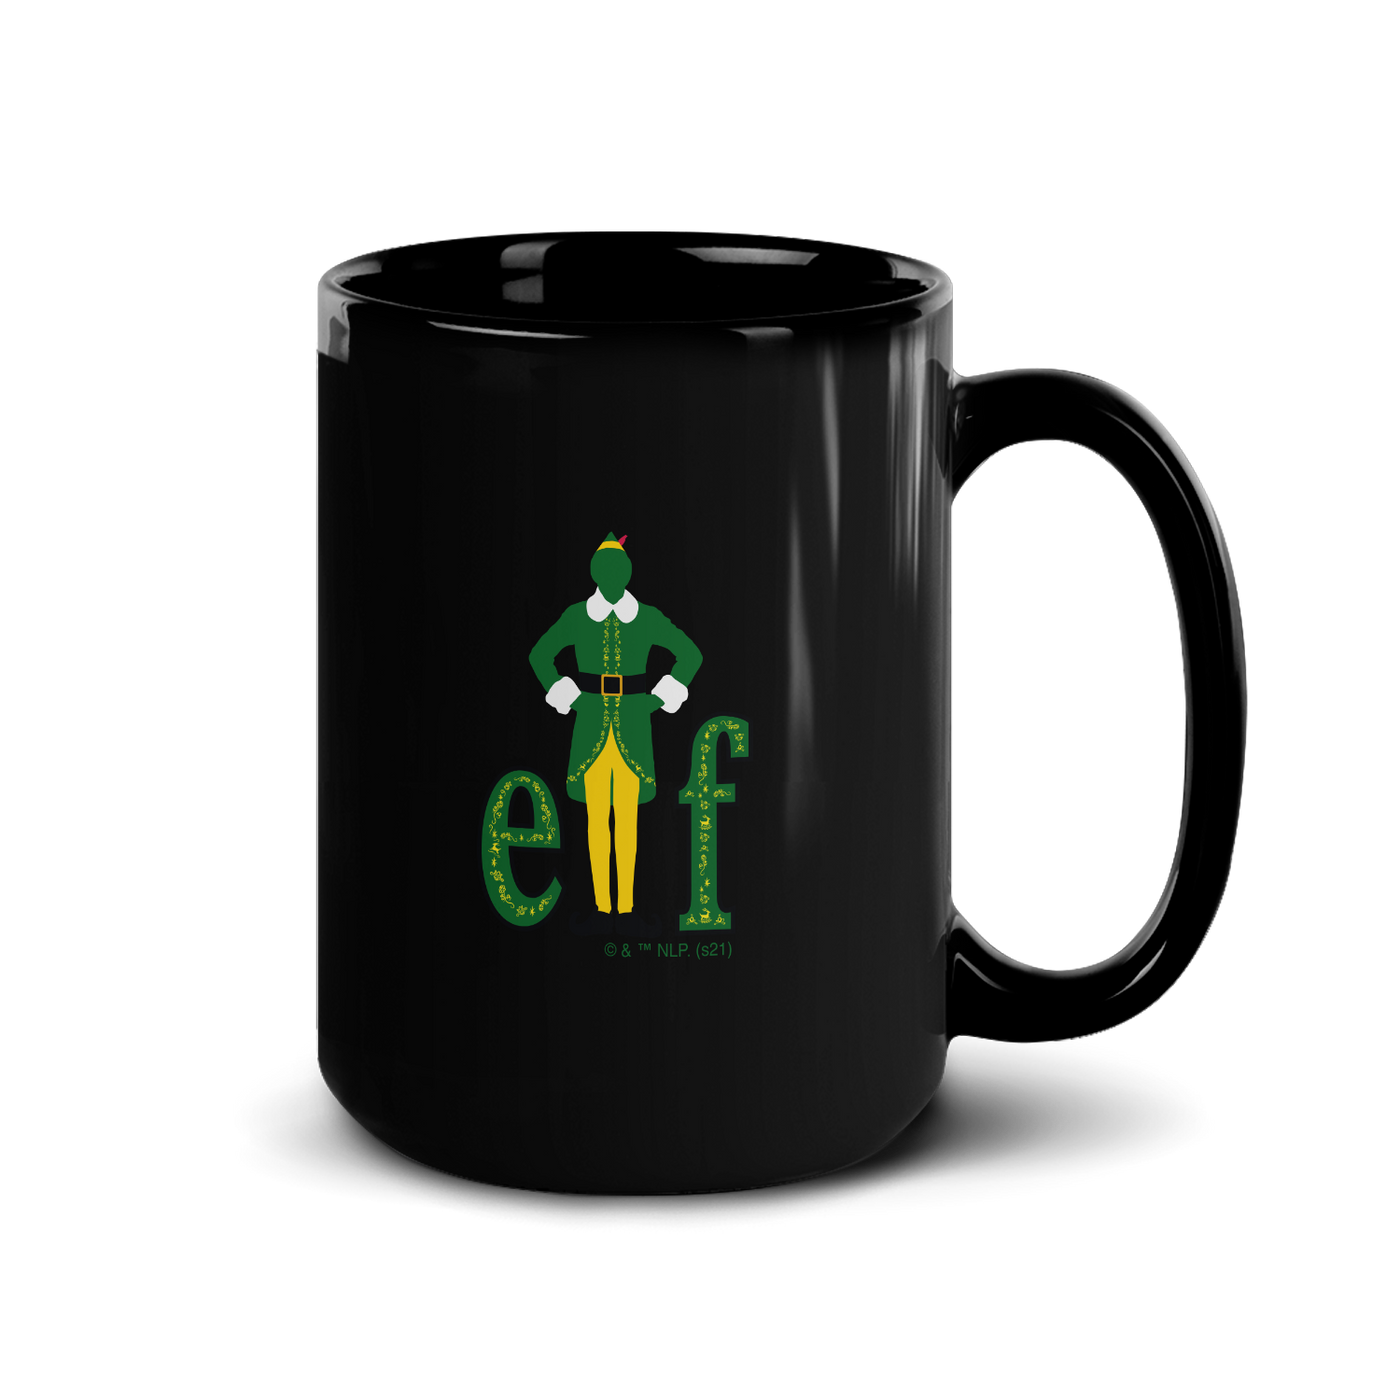 Elf 4 Main Food Groups Mug